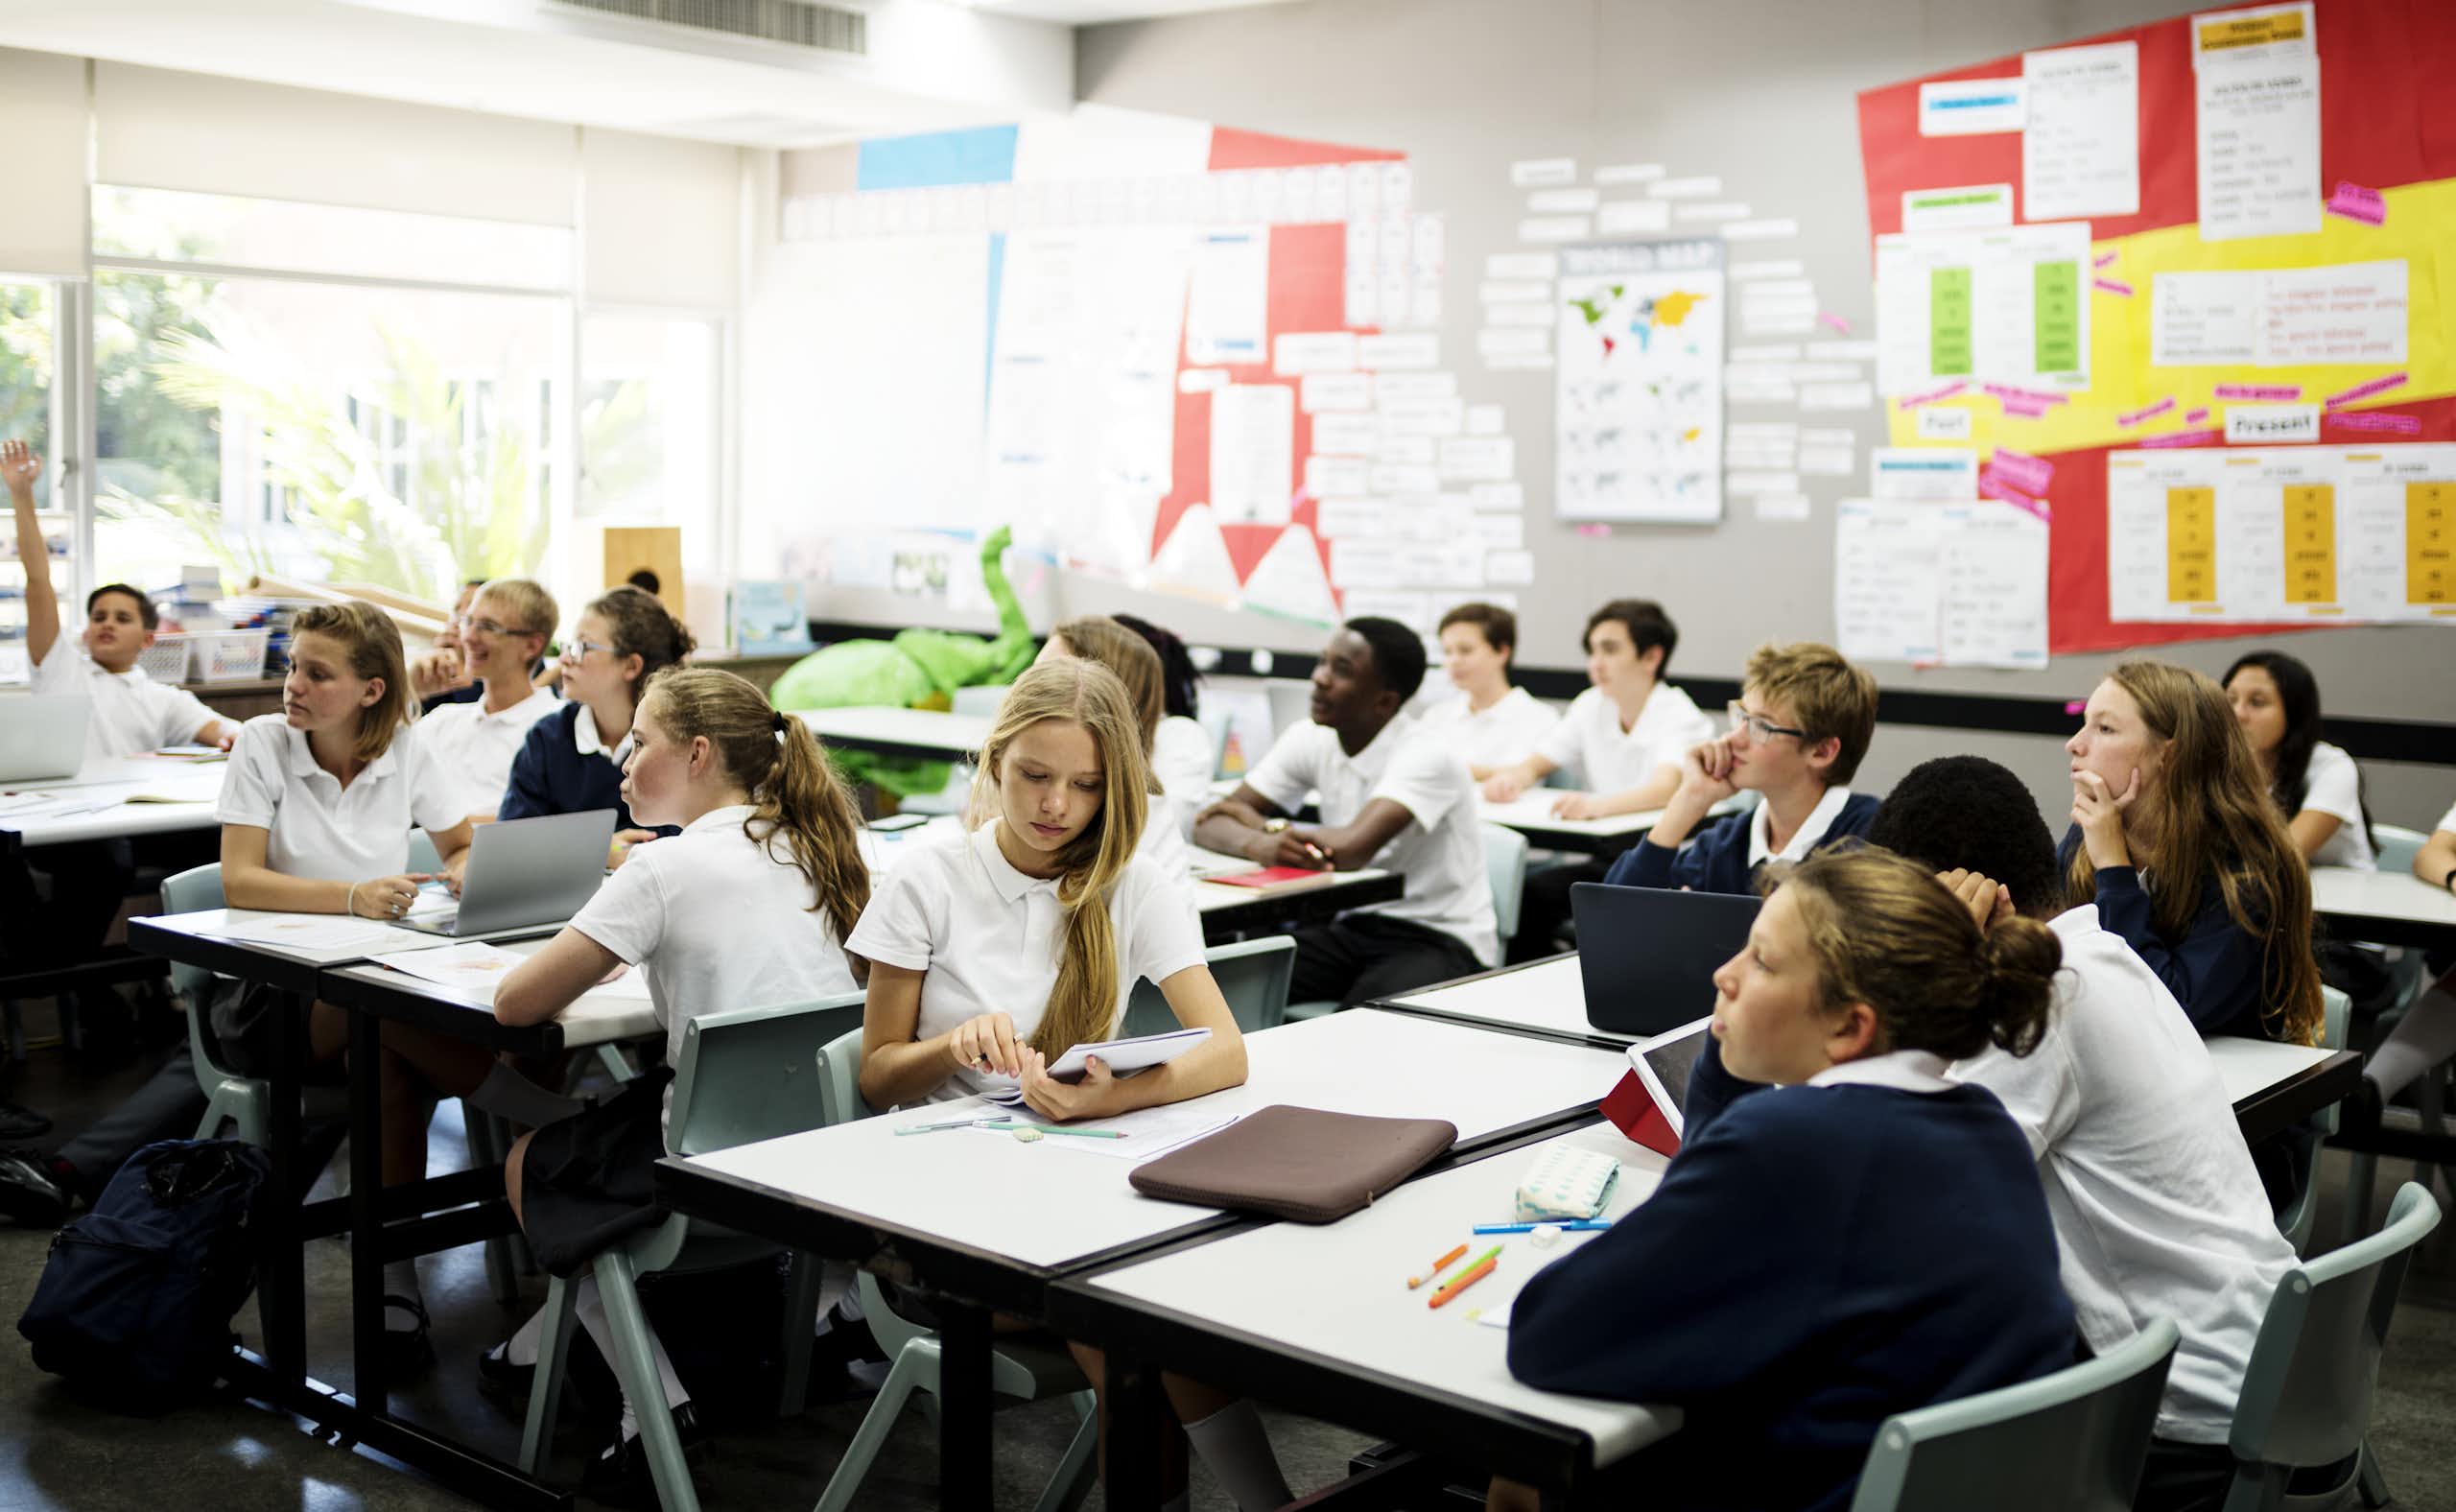 School students wearing uniform sitting in classroom